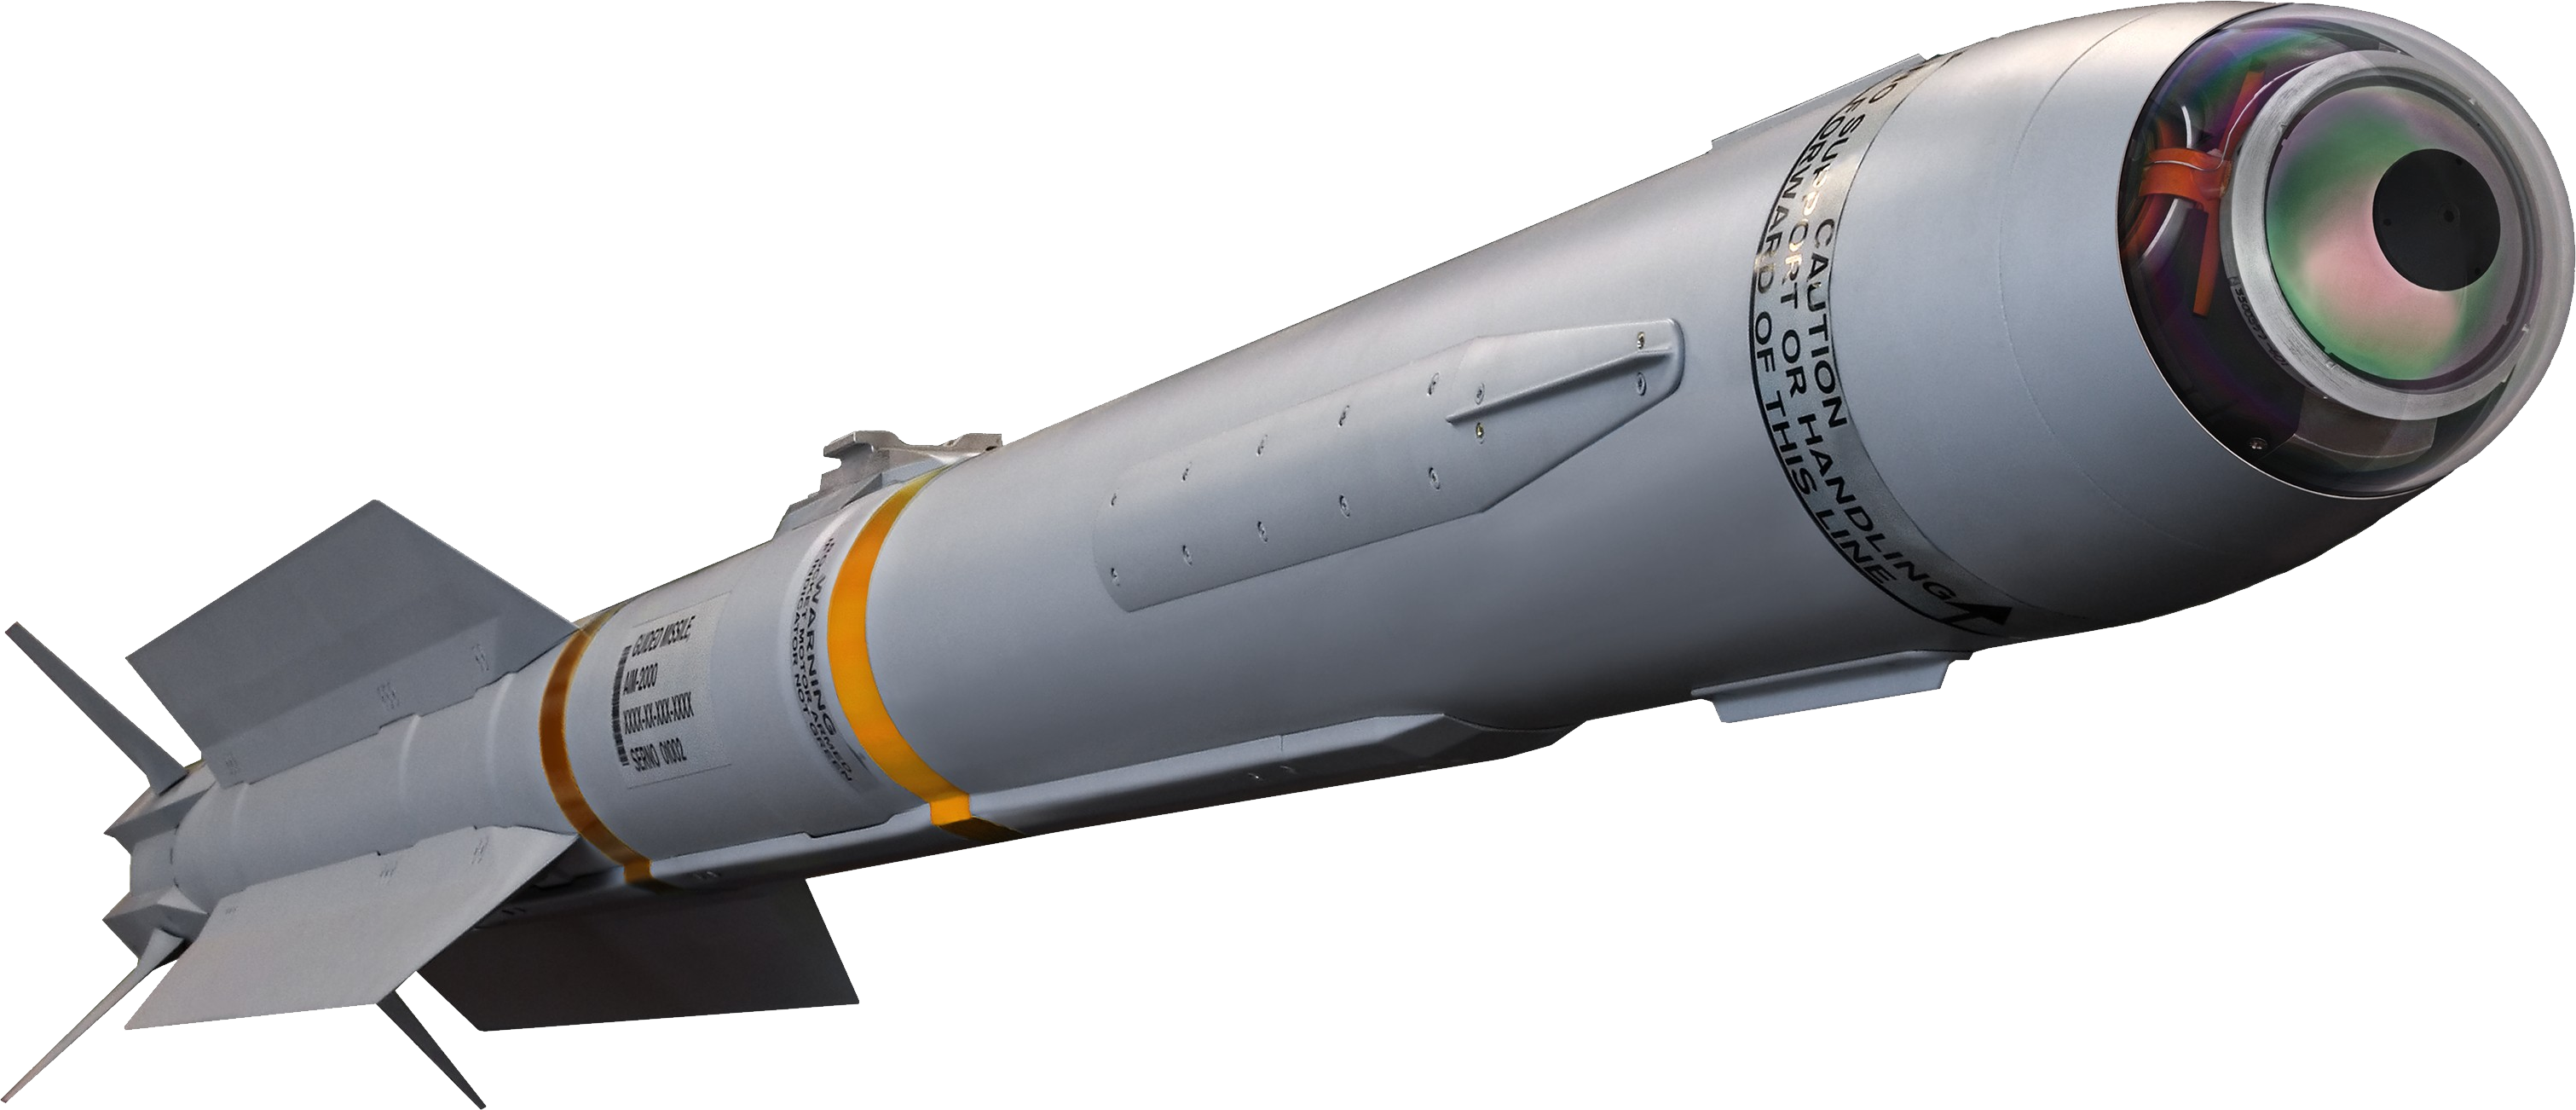 Missile. Png #40384